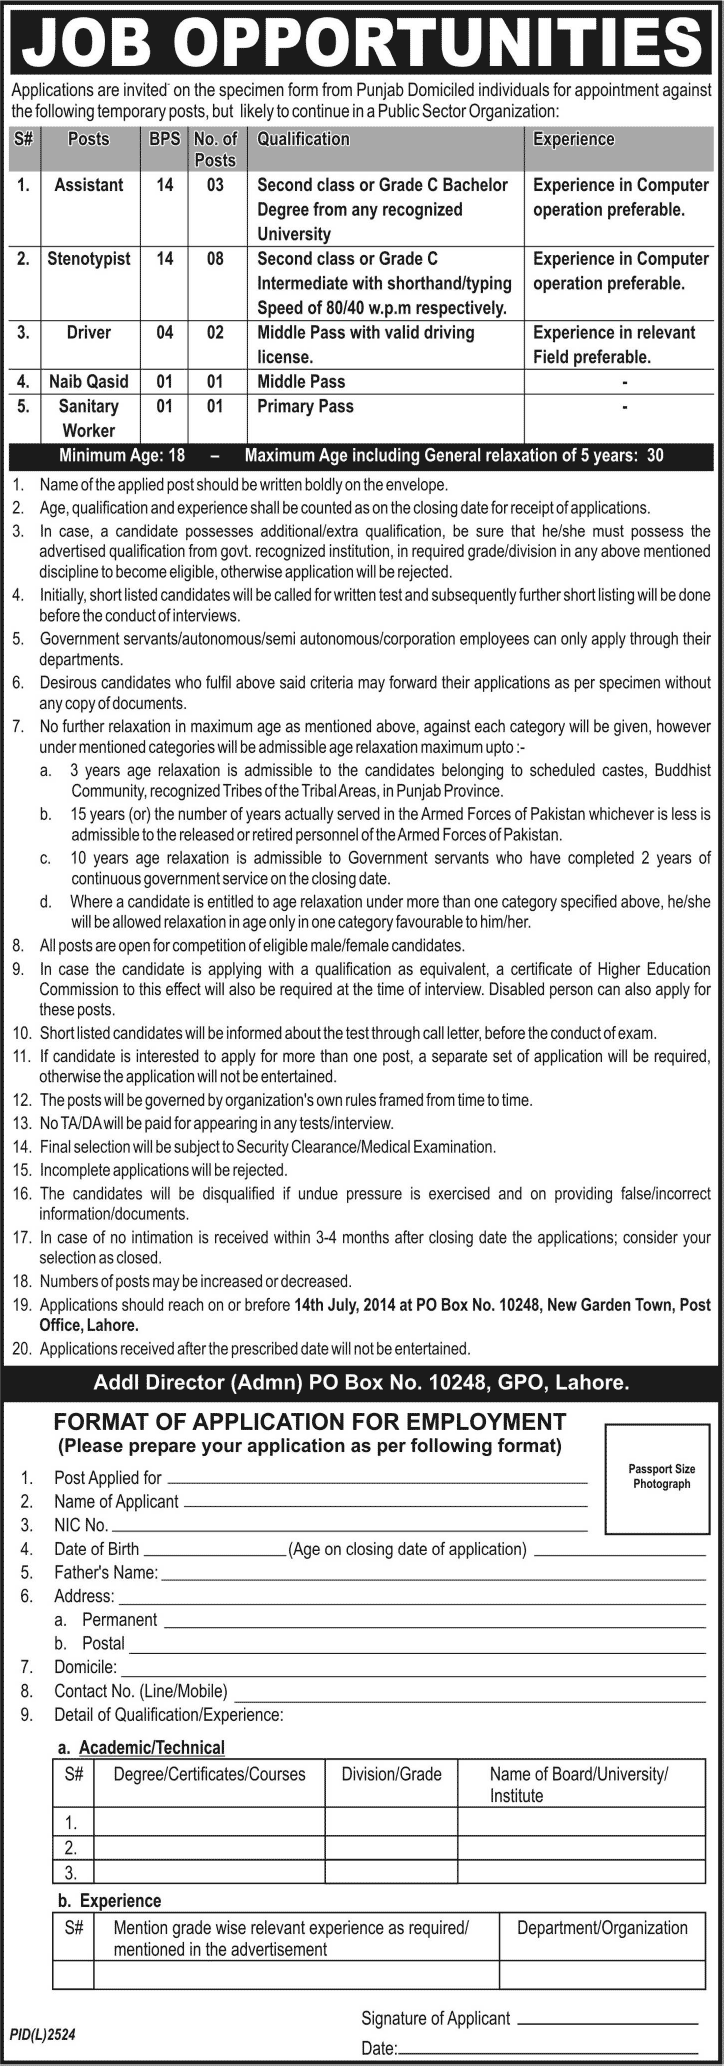 Public Sector Organization Jobs in Lahore 2014 June / July PO Box 10248 GPO